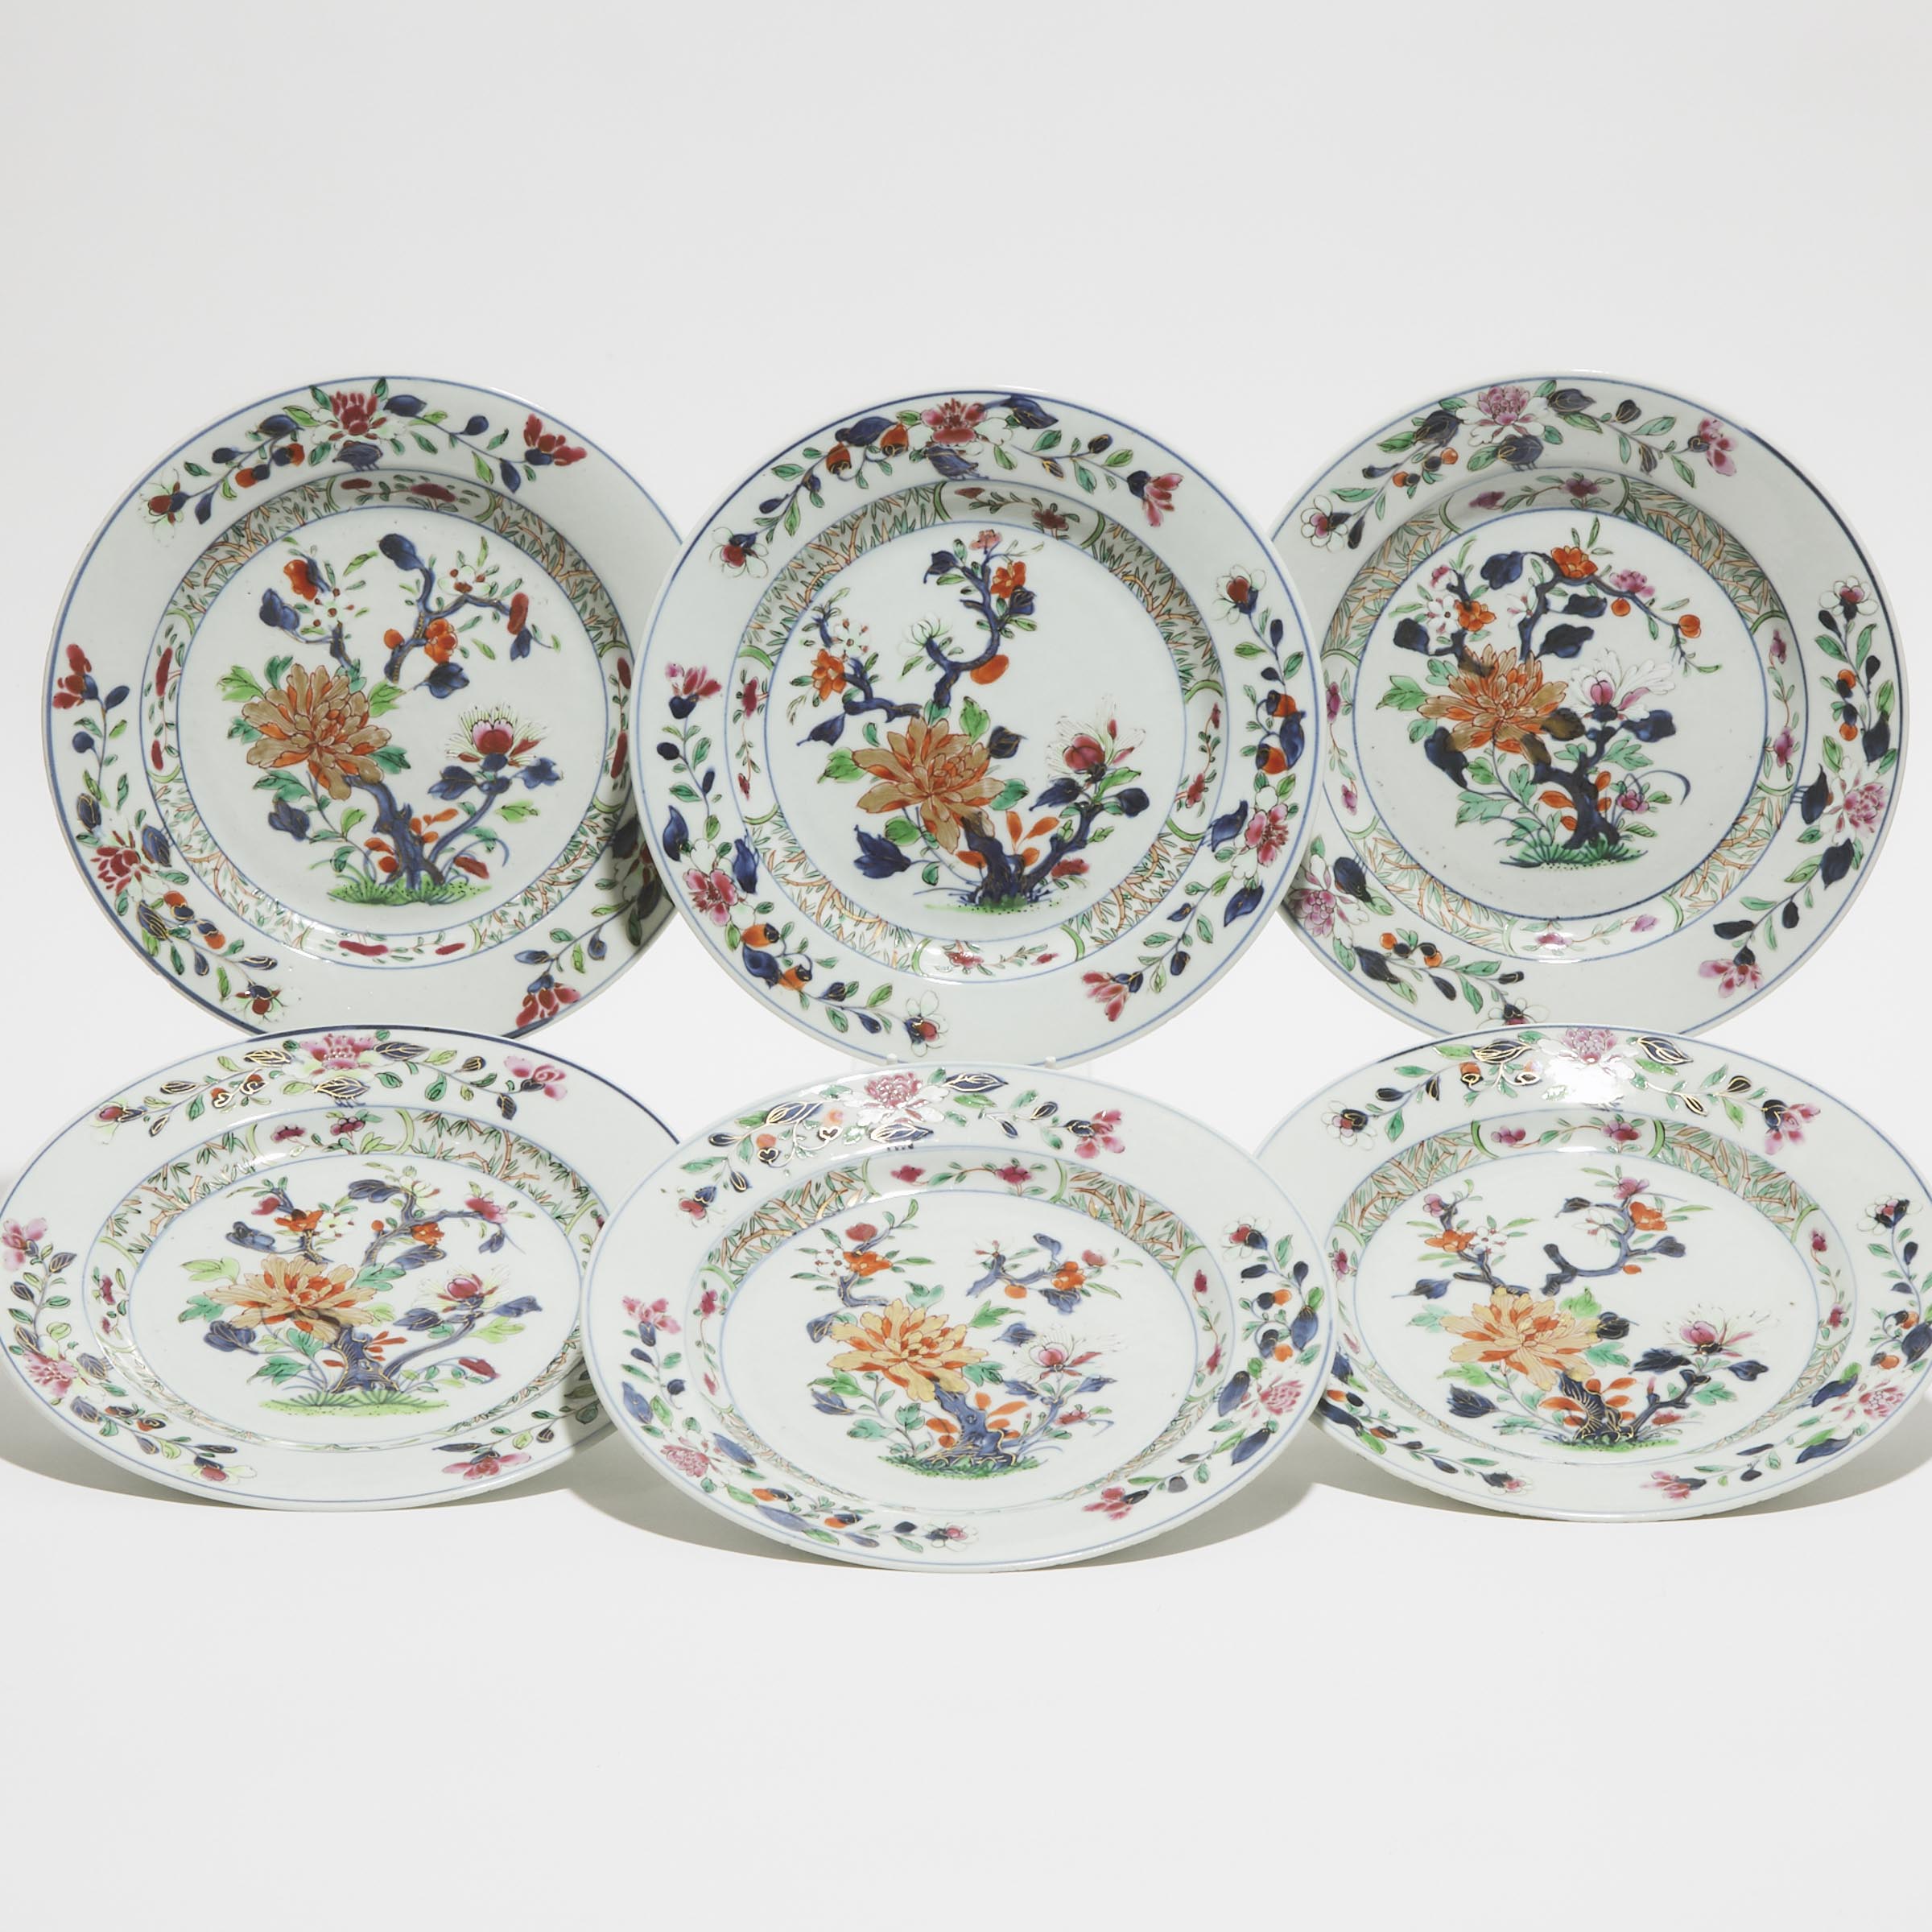 A Set of Six Chinese Imari Plates, 18th Century